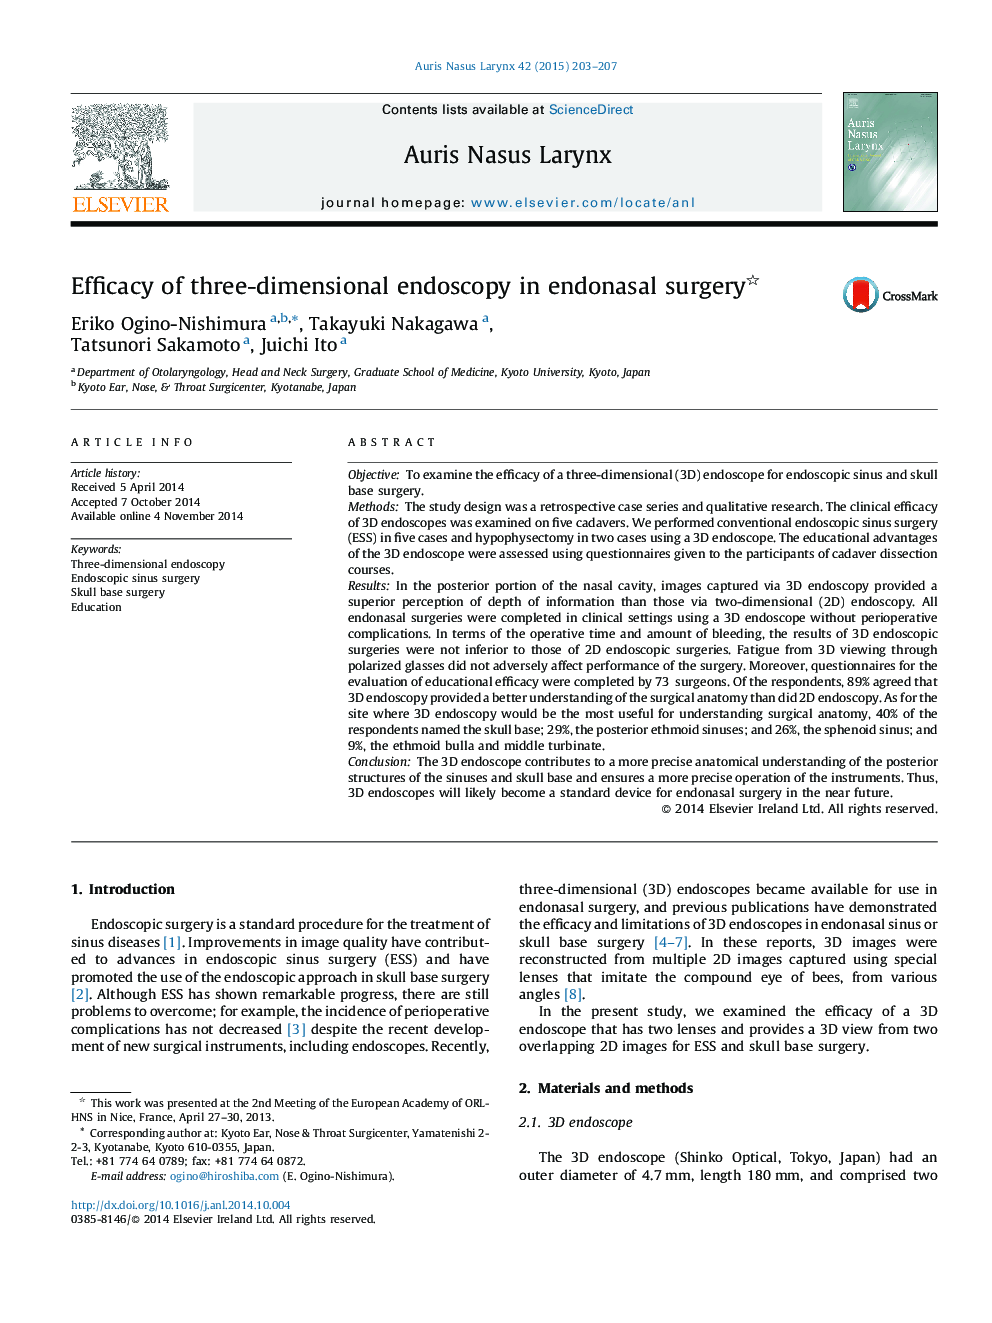 Efficacy of three-dimensional endoscopy in endonasal surgery